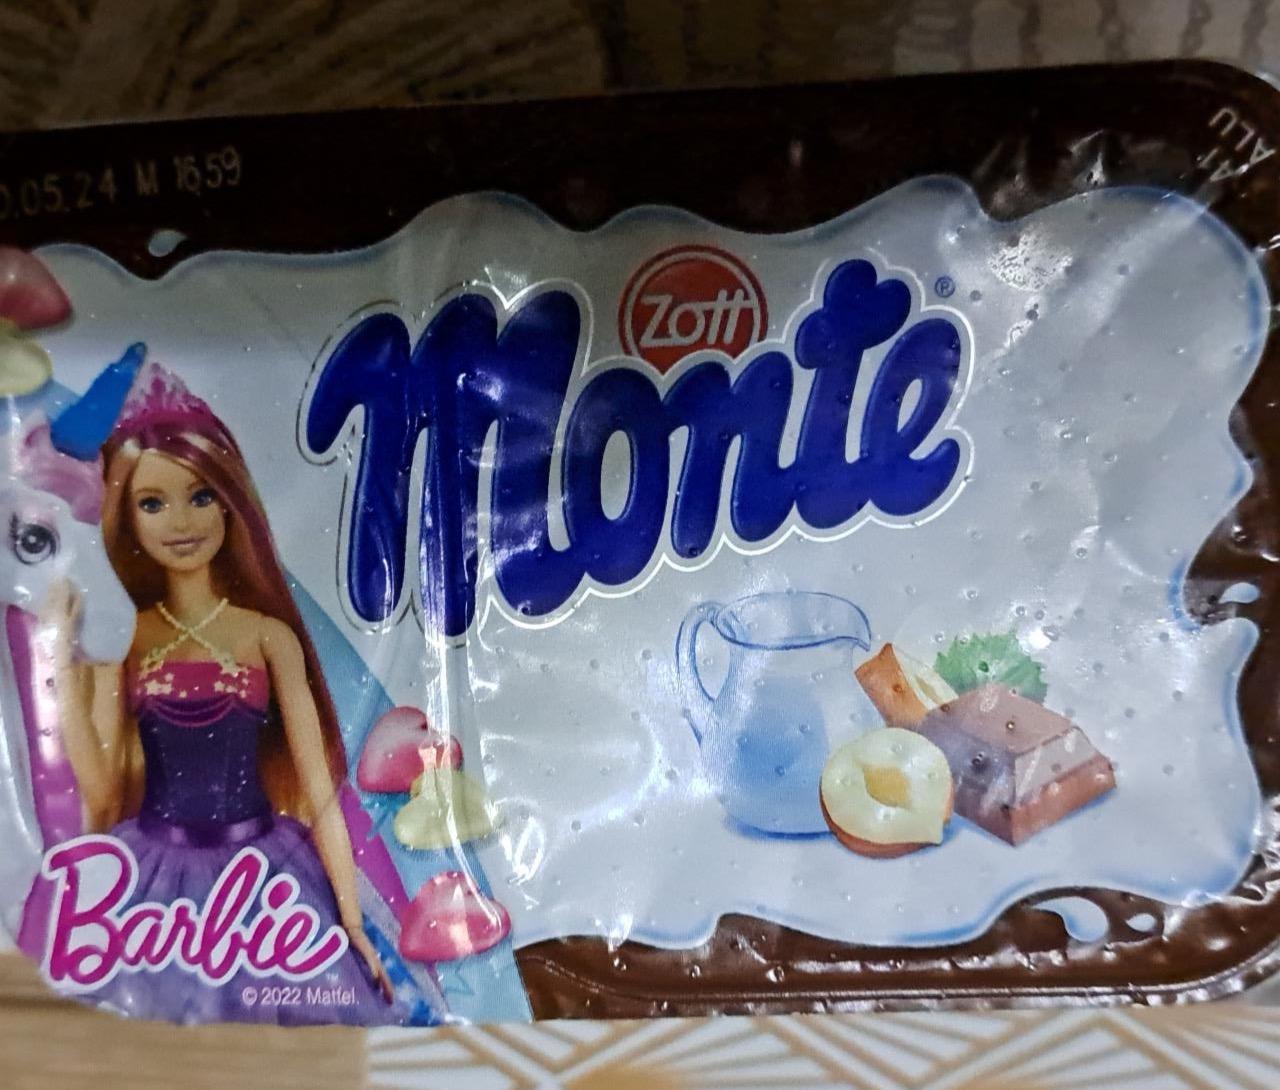 Képek - Barbie Monte tejdesszert Zott